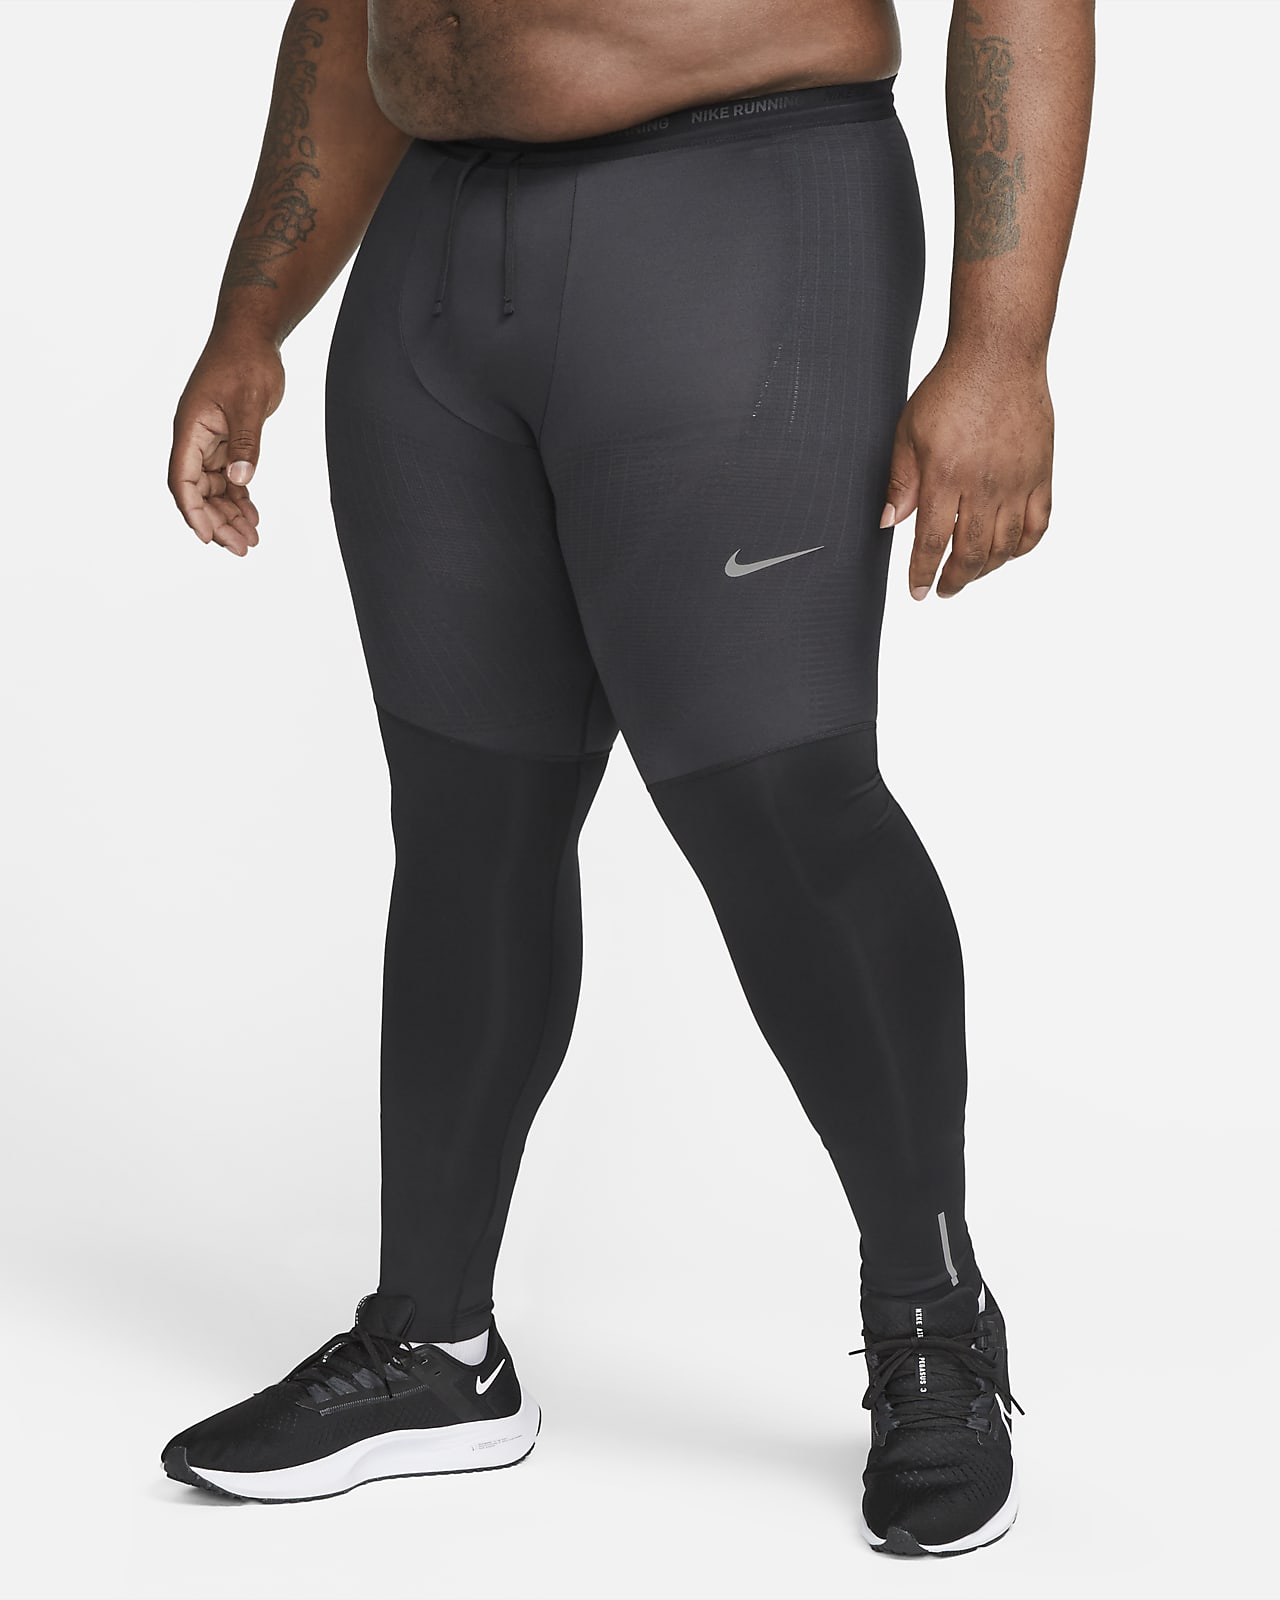 Nike Men Phenom Elite Running Tights (Small, Black)